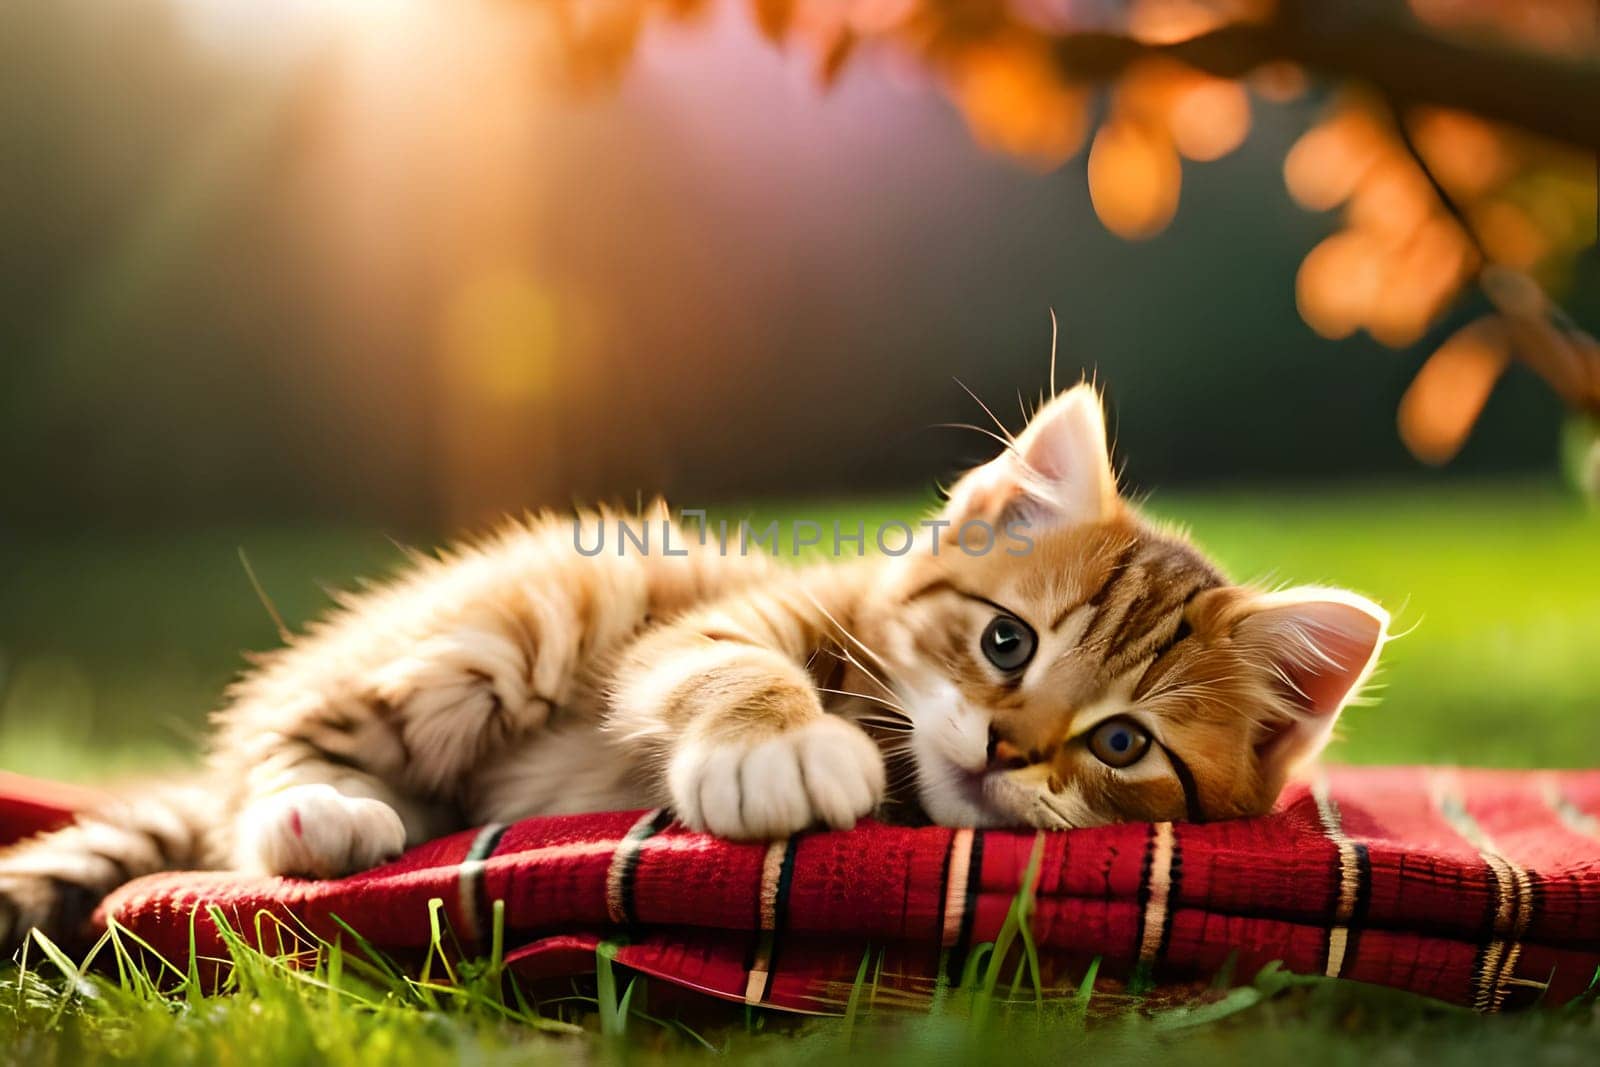 Cute little red kitten sleeps on fur white blanket. kitten sleeping on gray plaid wool blanket with tassels, embracing soft beige knitted toy